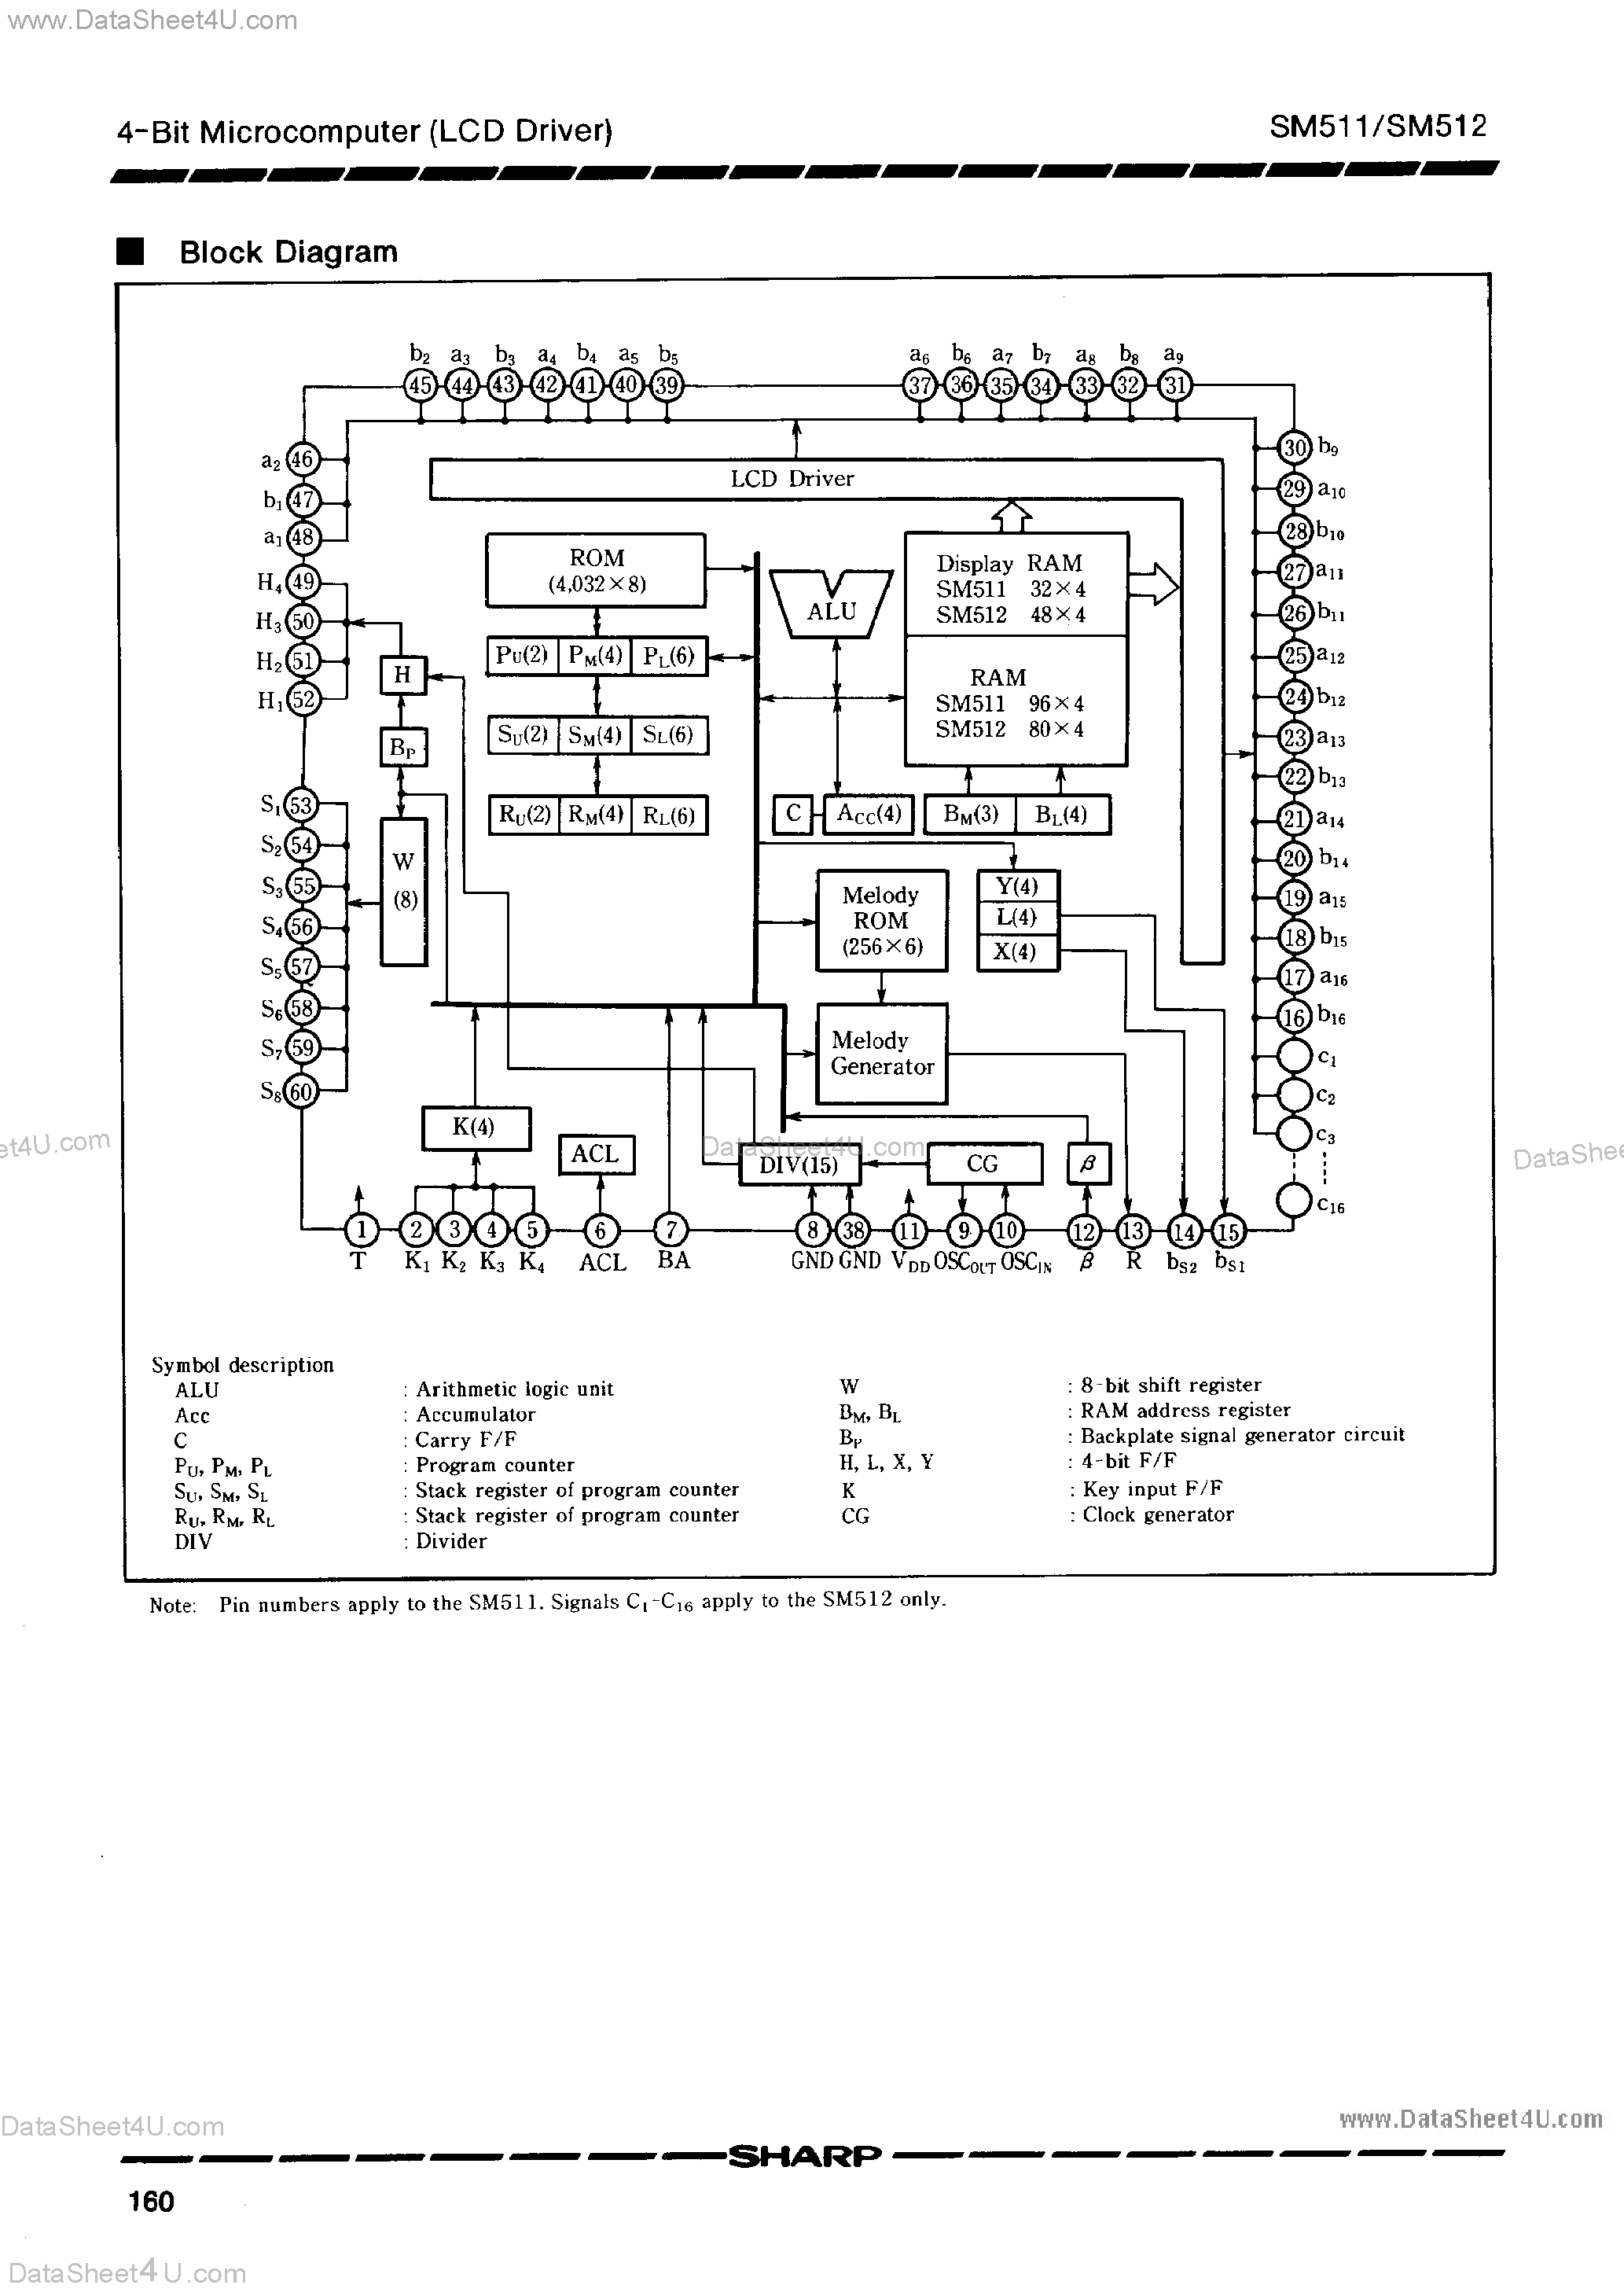 Даташит SM511 - (SM511 / SM512) 4-Bit Microcomputer страница 2